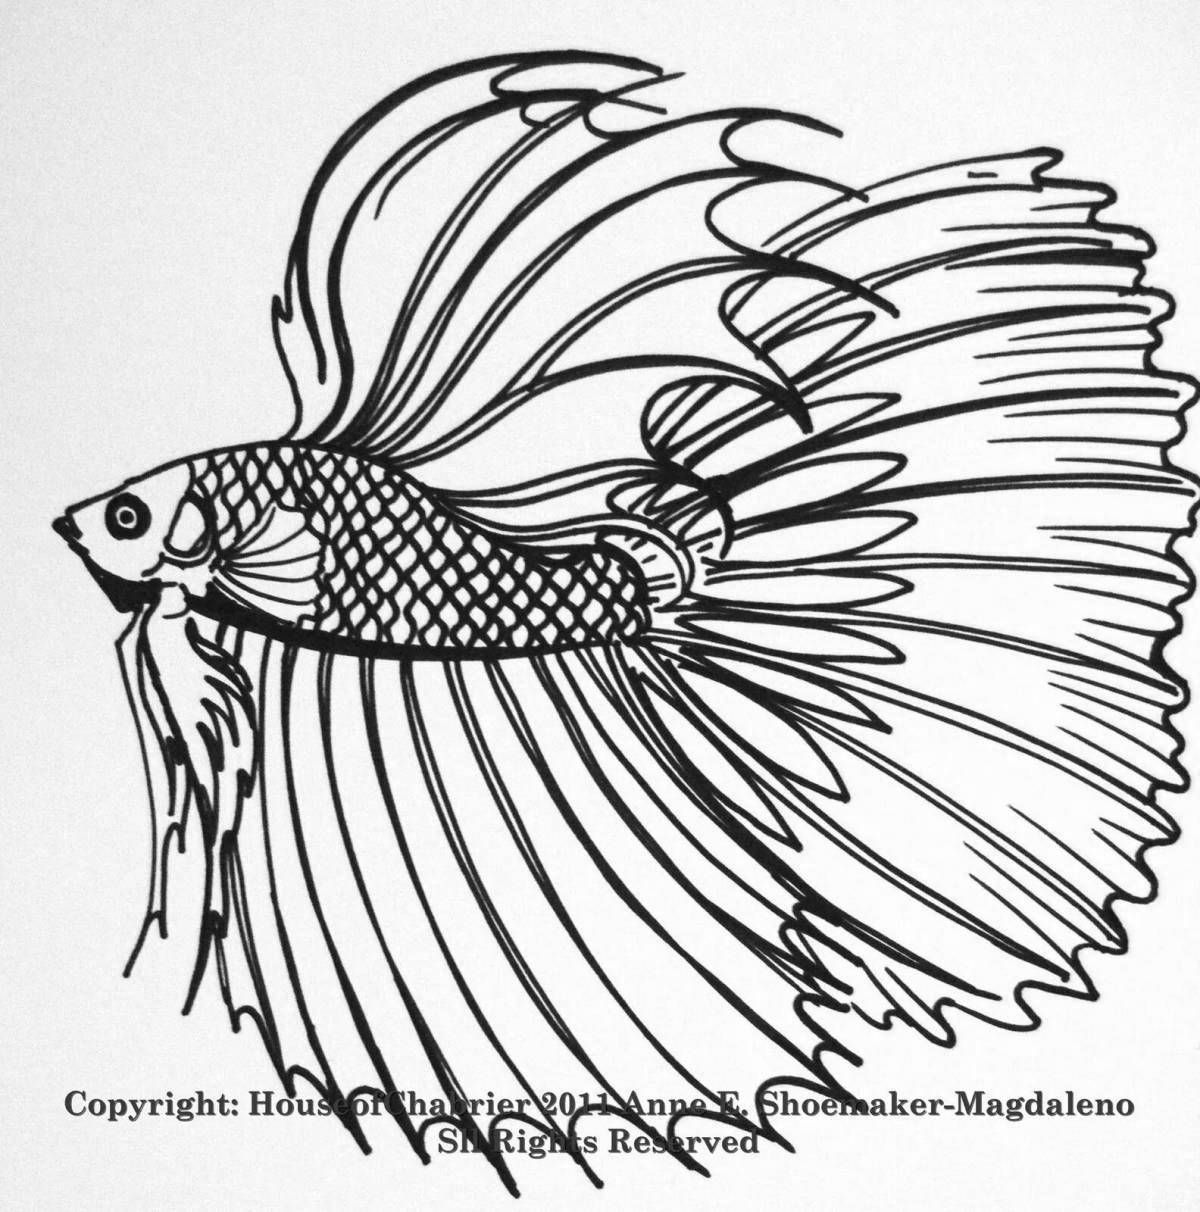 Violent cockerel fish coloring book